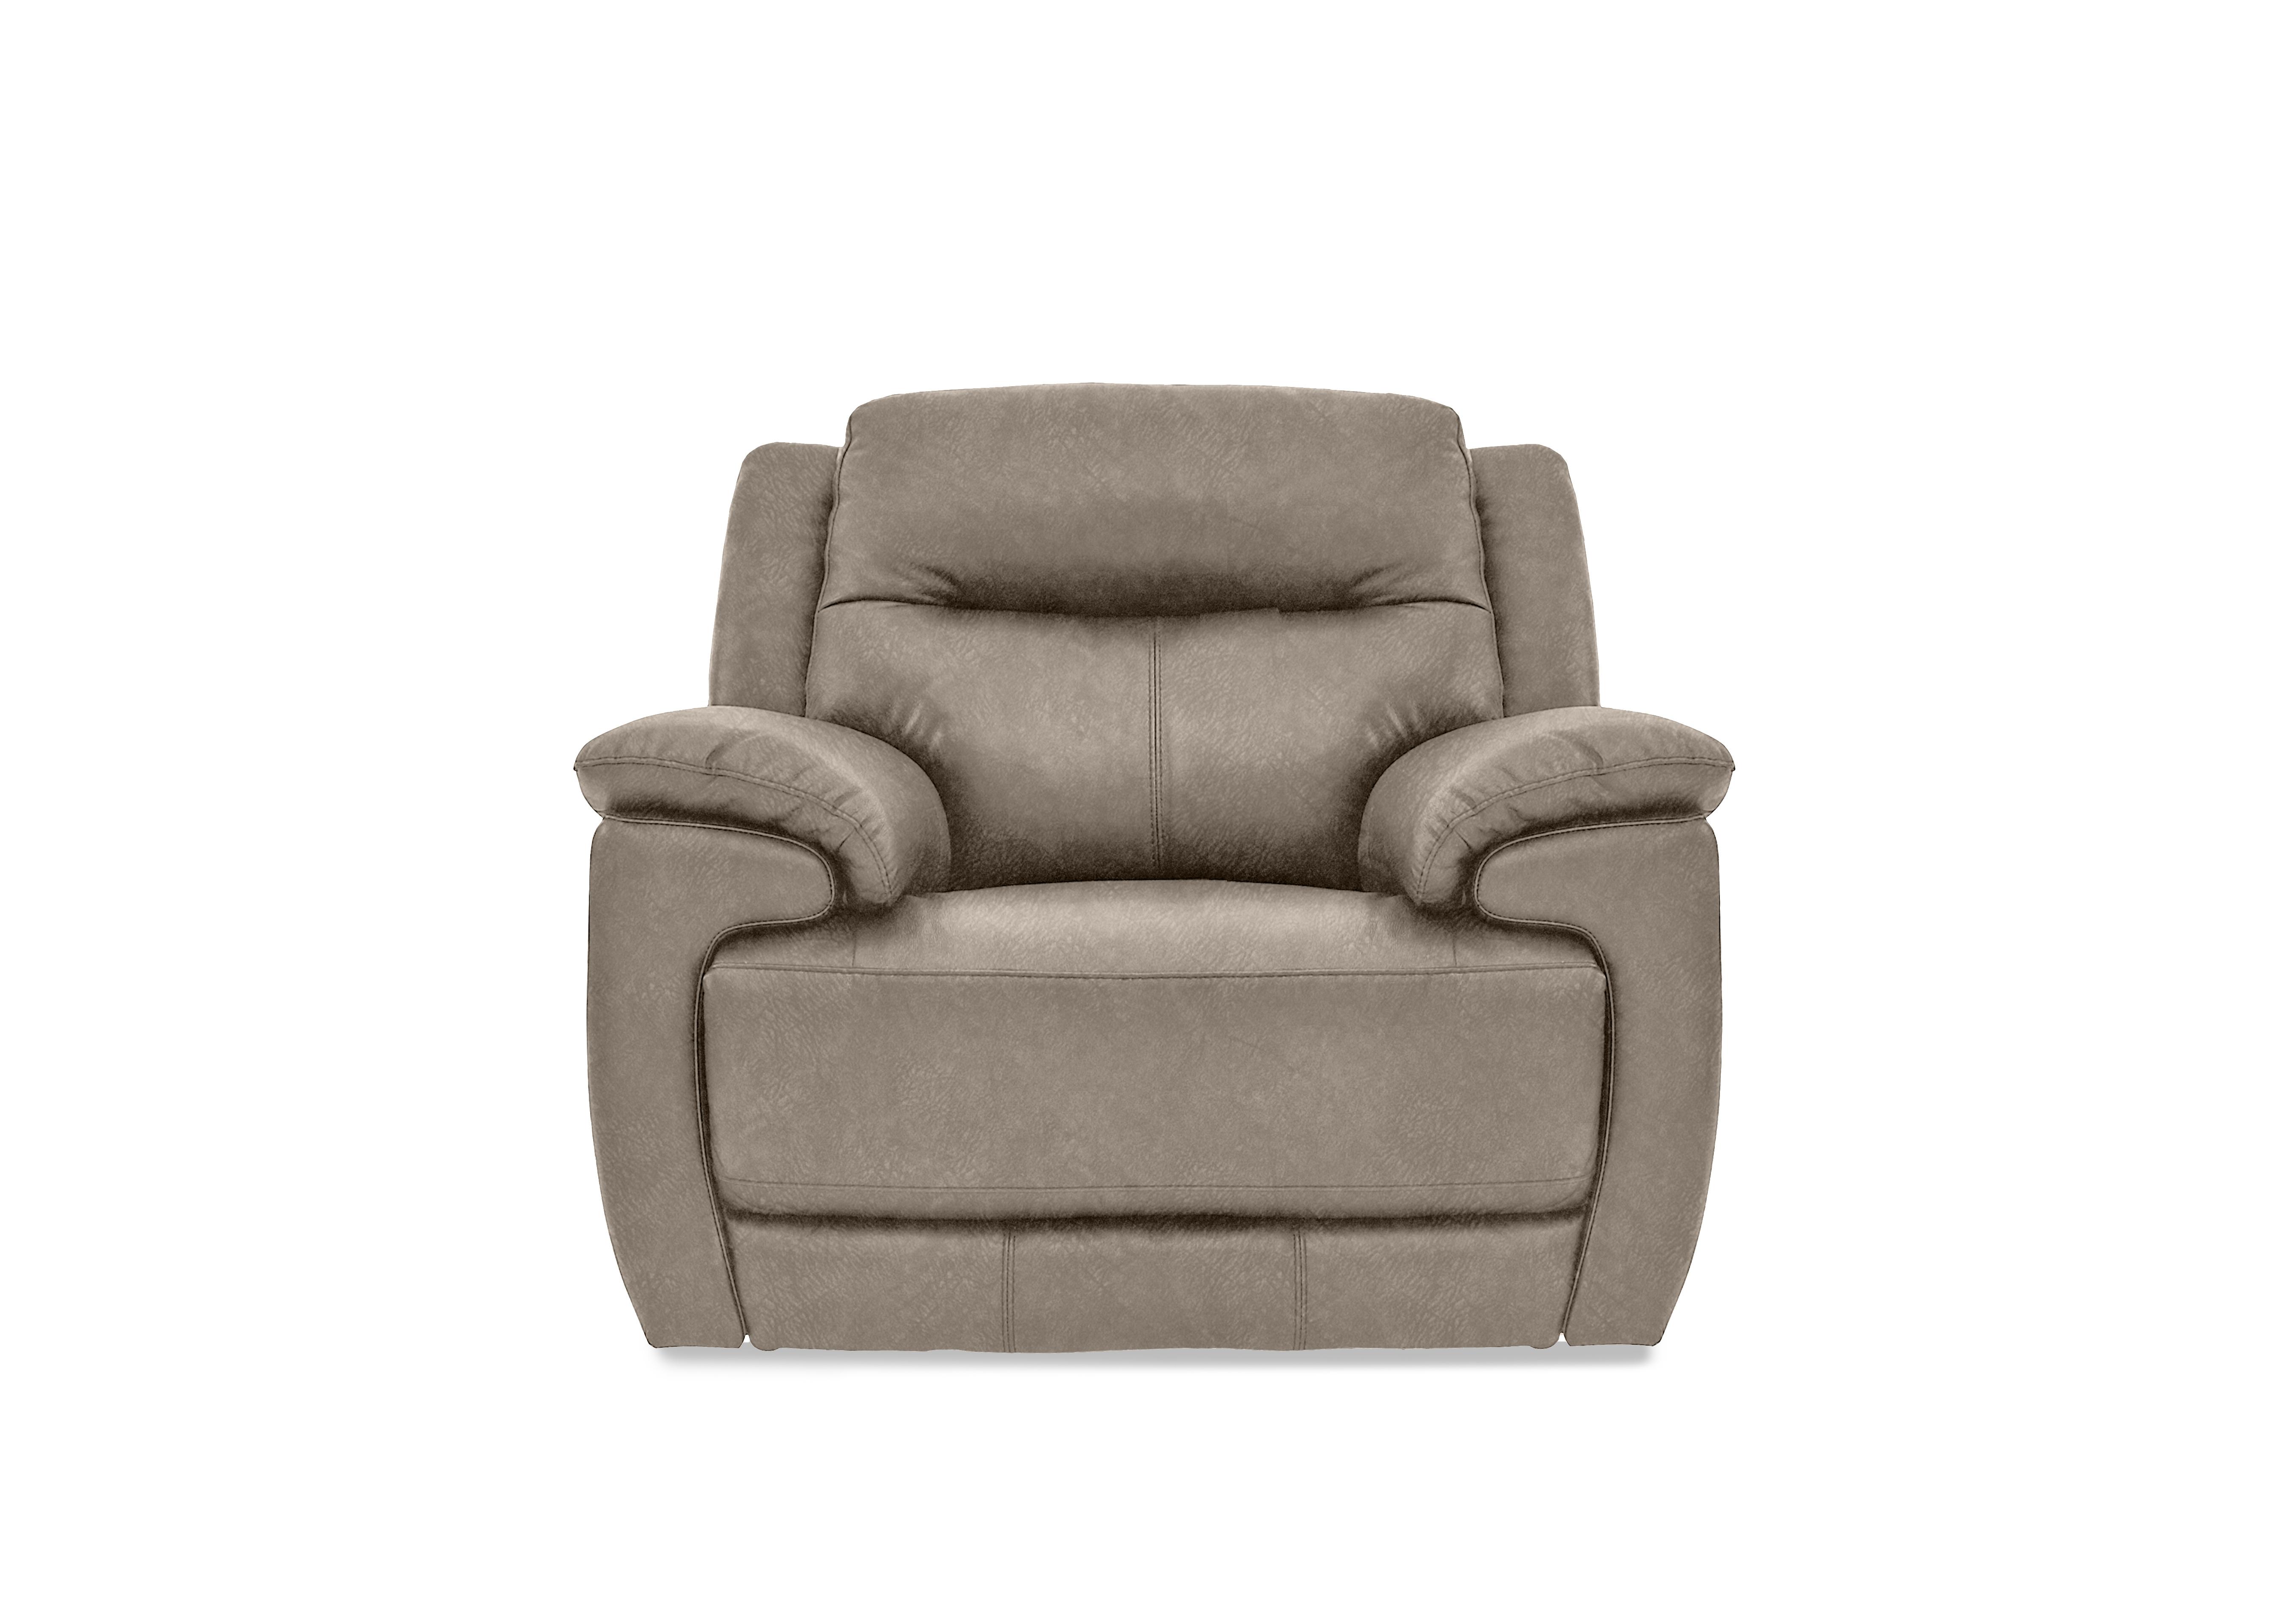 Touch Fabric Armchair in Bfa-Bnn-R29 Fv1 Mink on Furniture Village